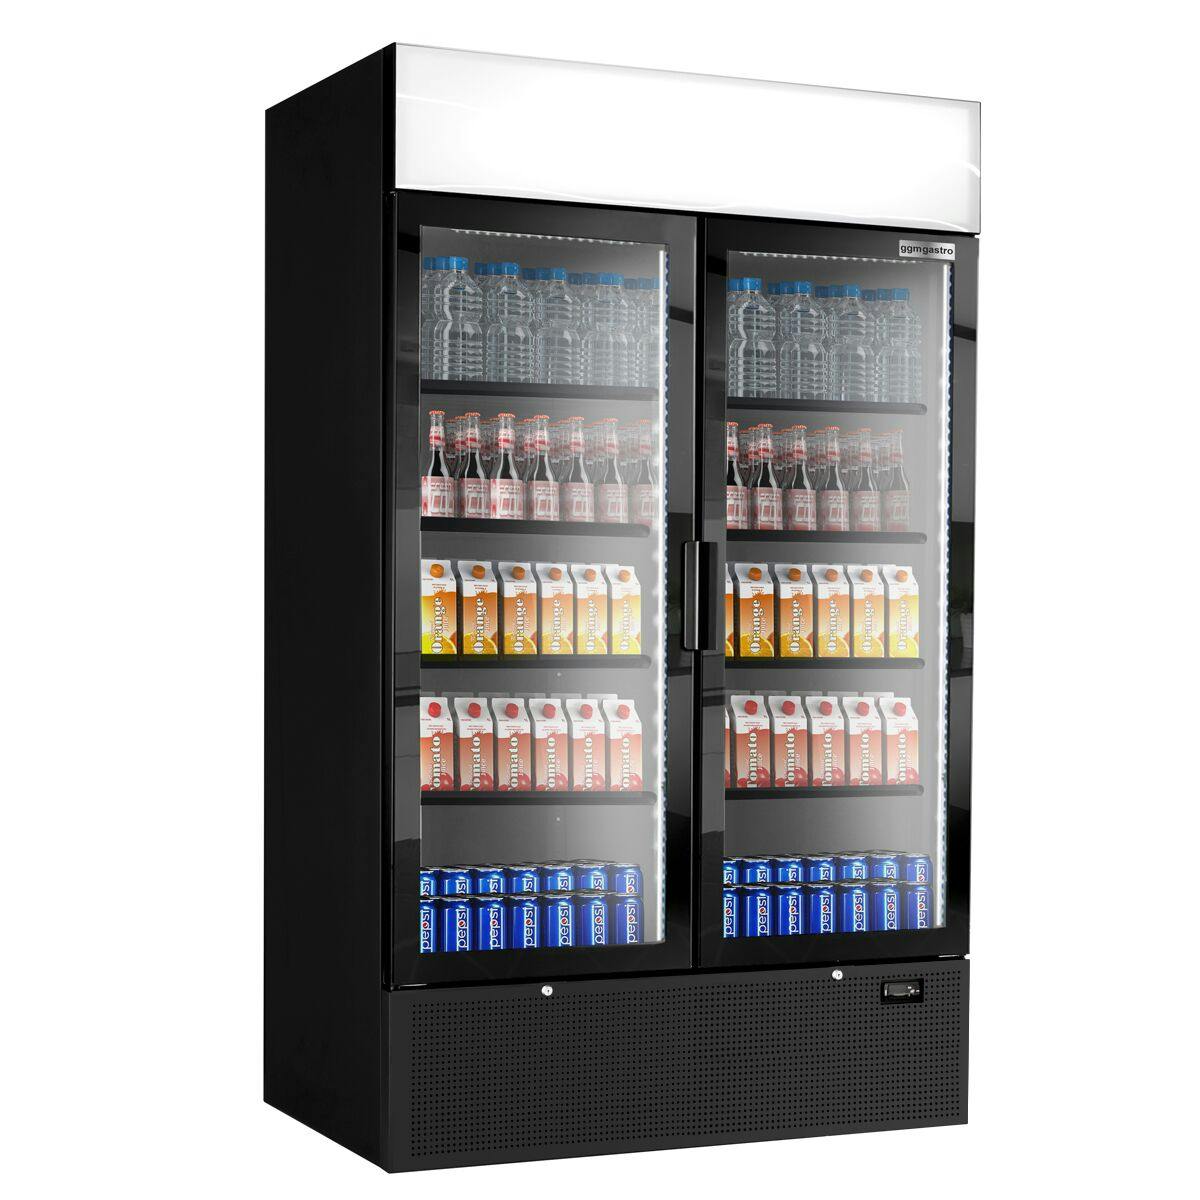 (5 pieces) Beverage refrigerator - 5240 litres (total) - black